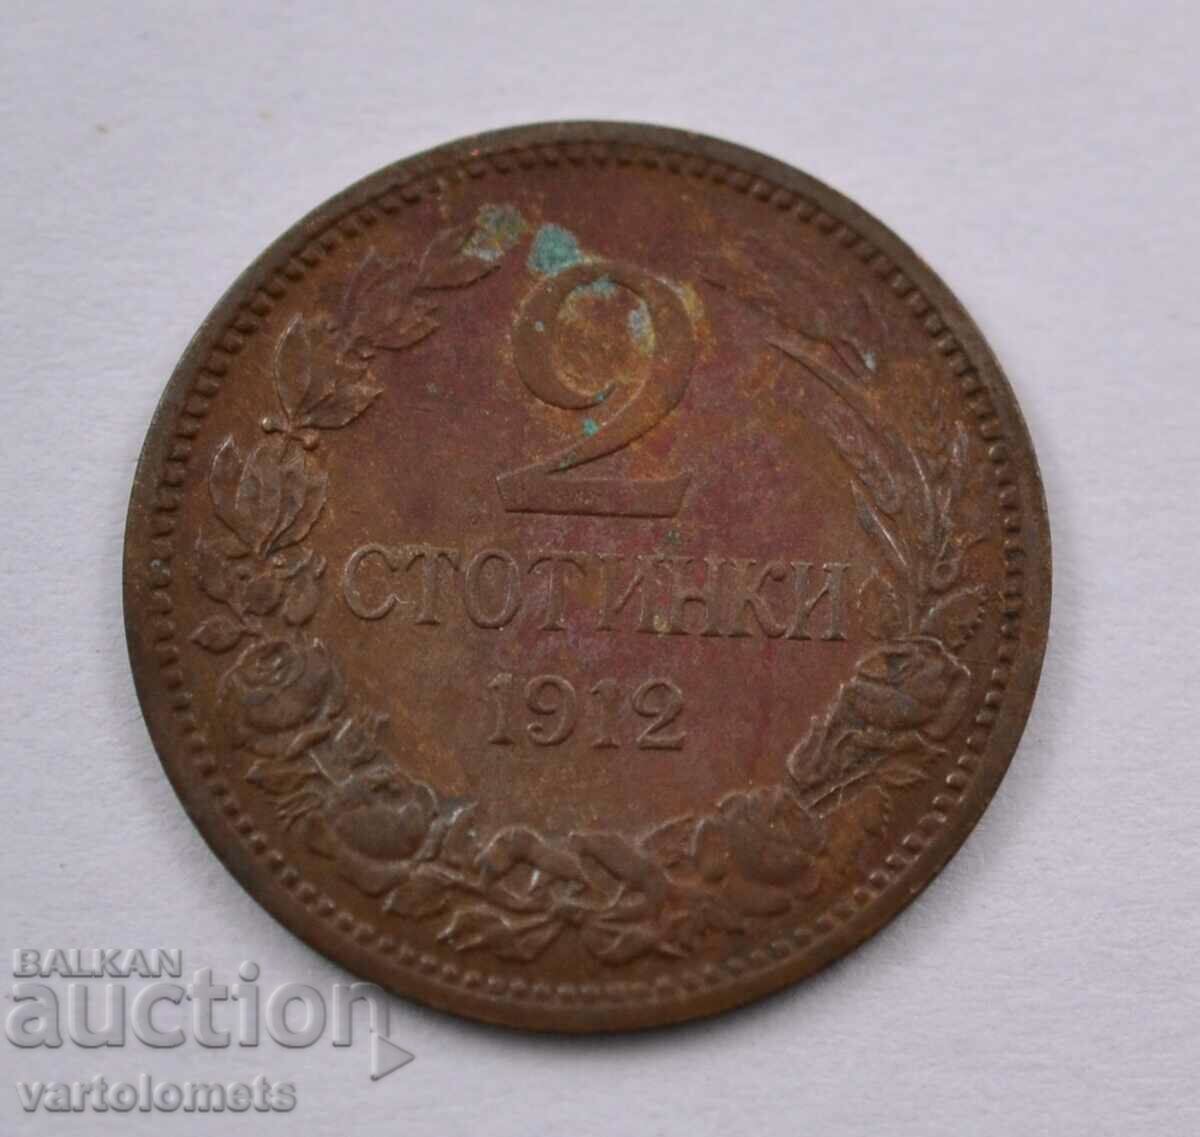 2 cents 1912 - Bulgaria